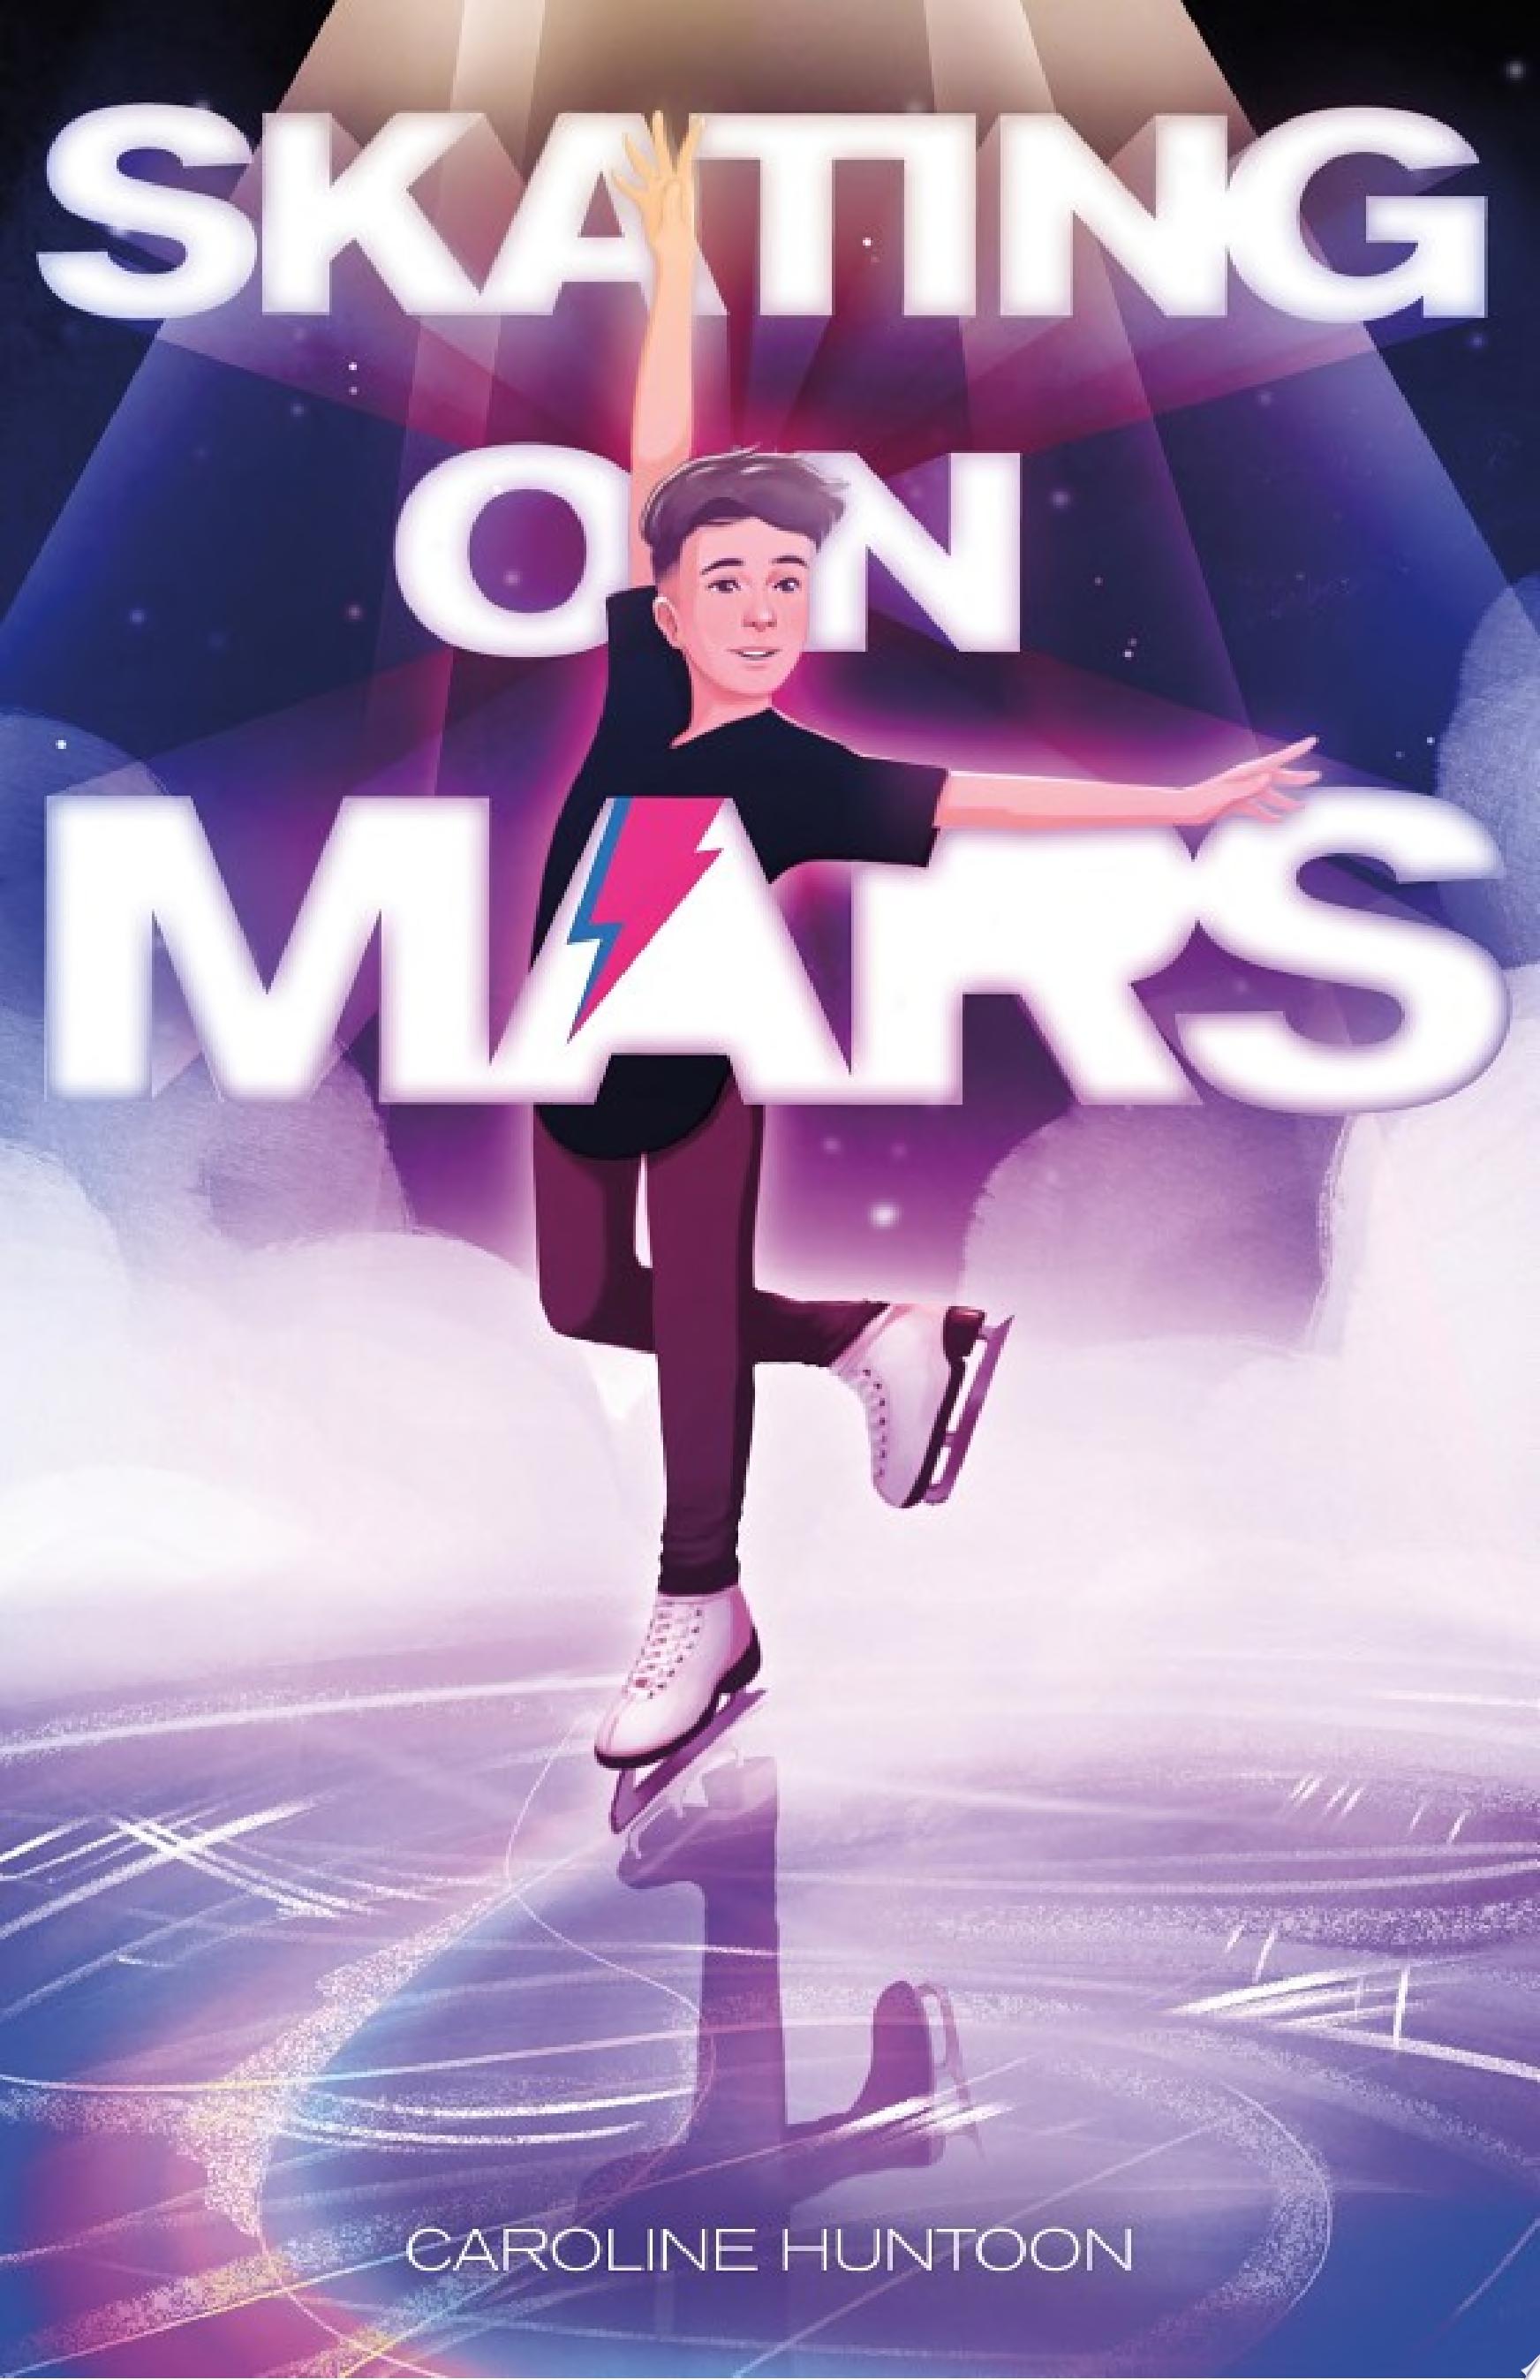 Image for "Skating on Mars"